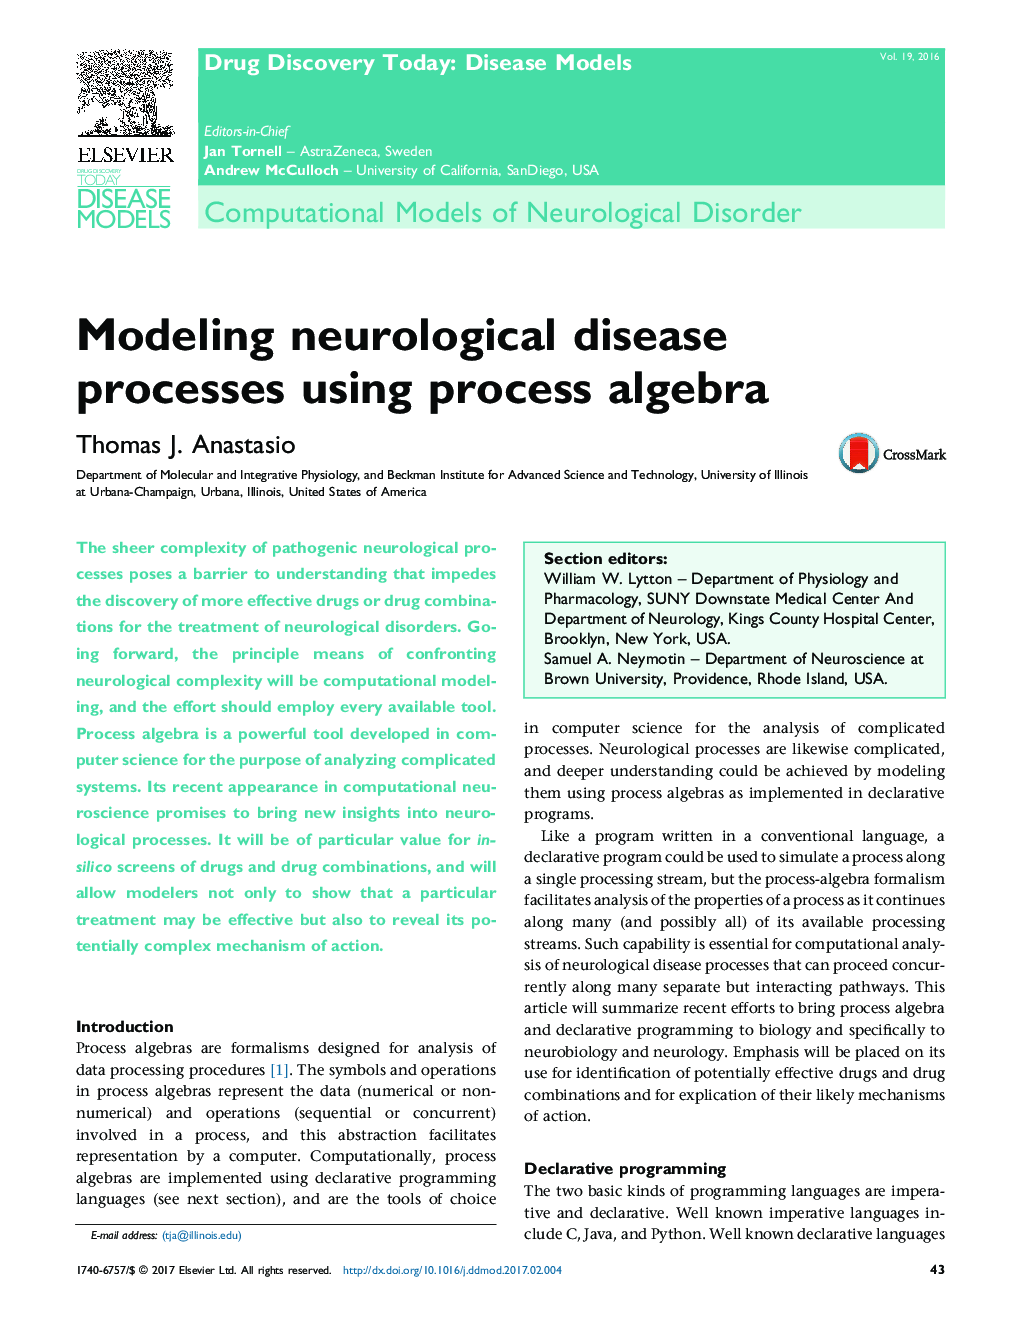 Computational Models of Neurological DisorderModeling neurological disease processes using process algebra